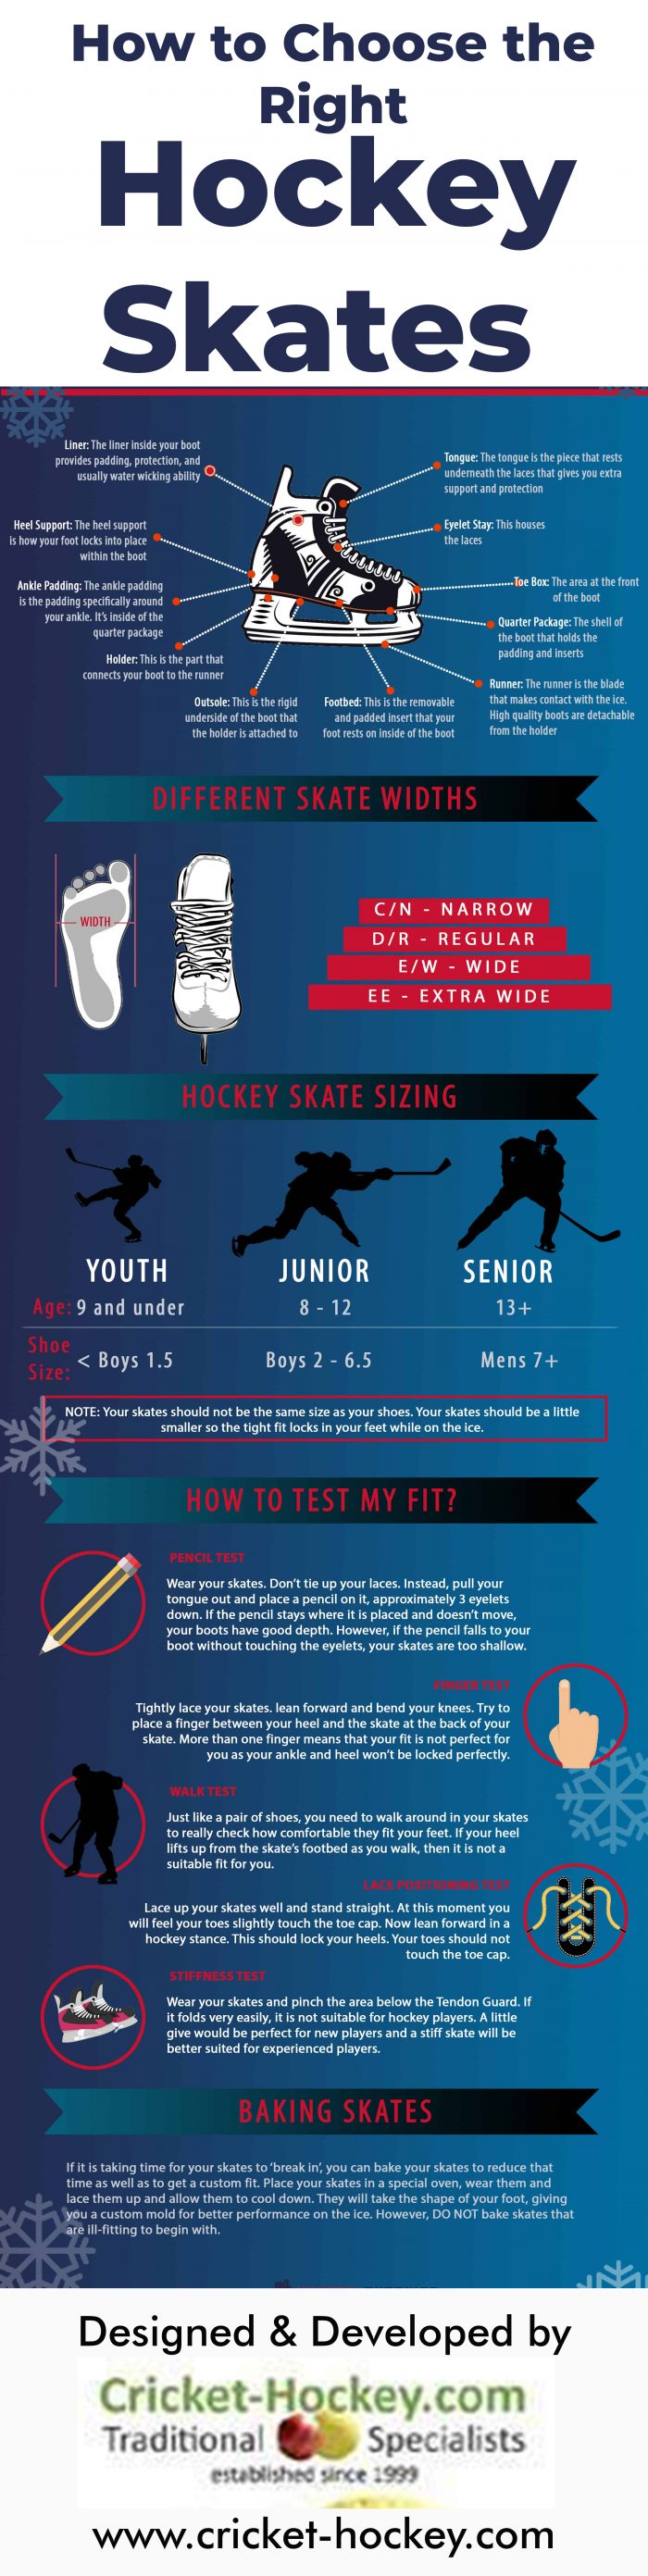 How to Choose the Right Hockey Skates